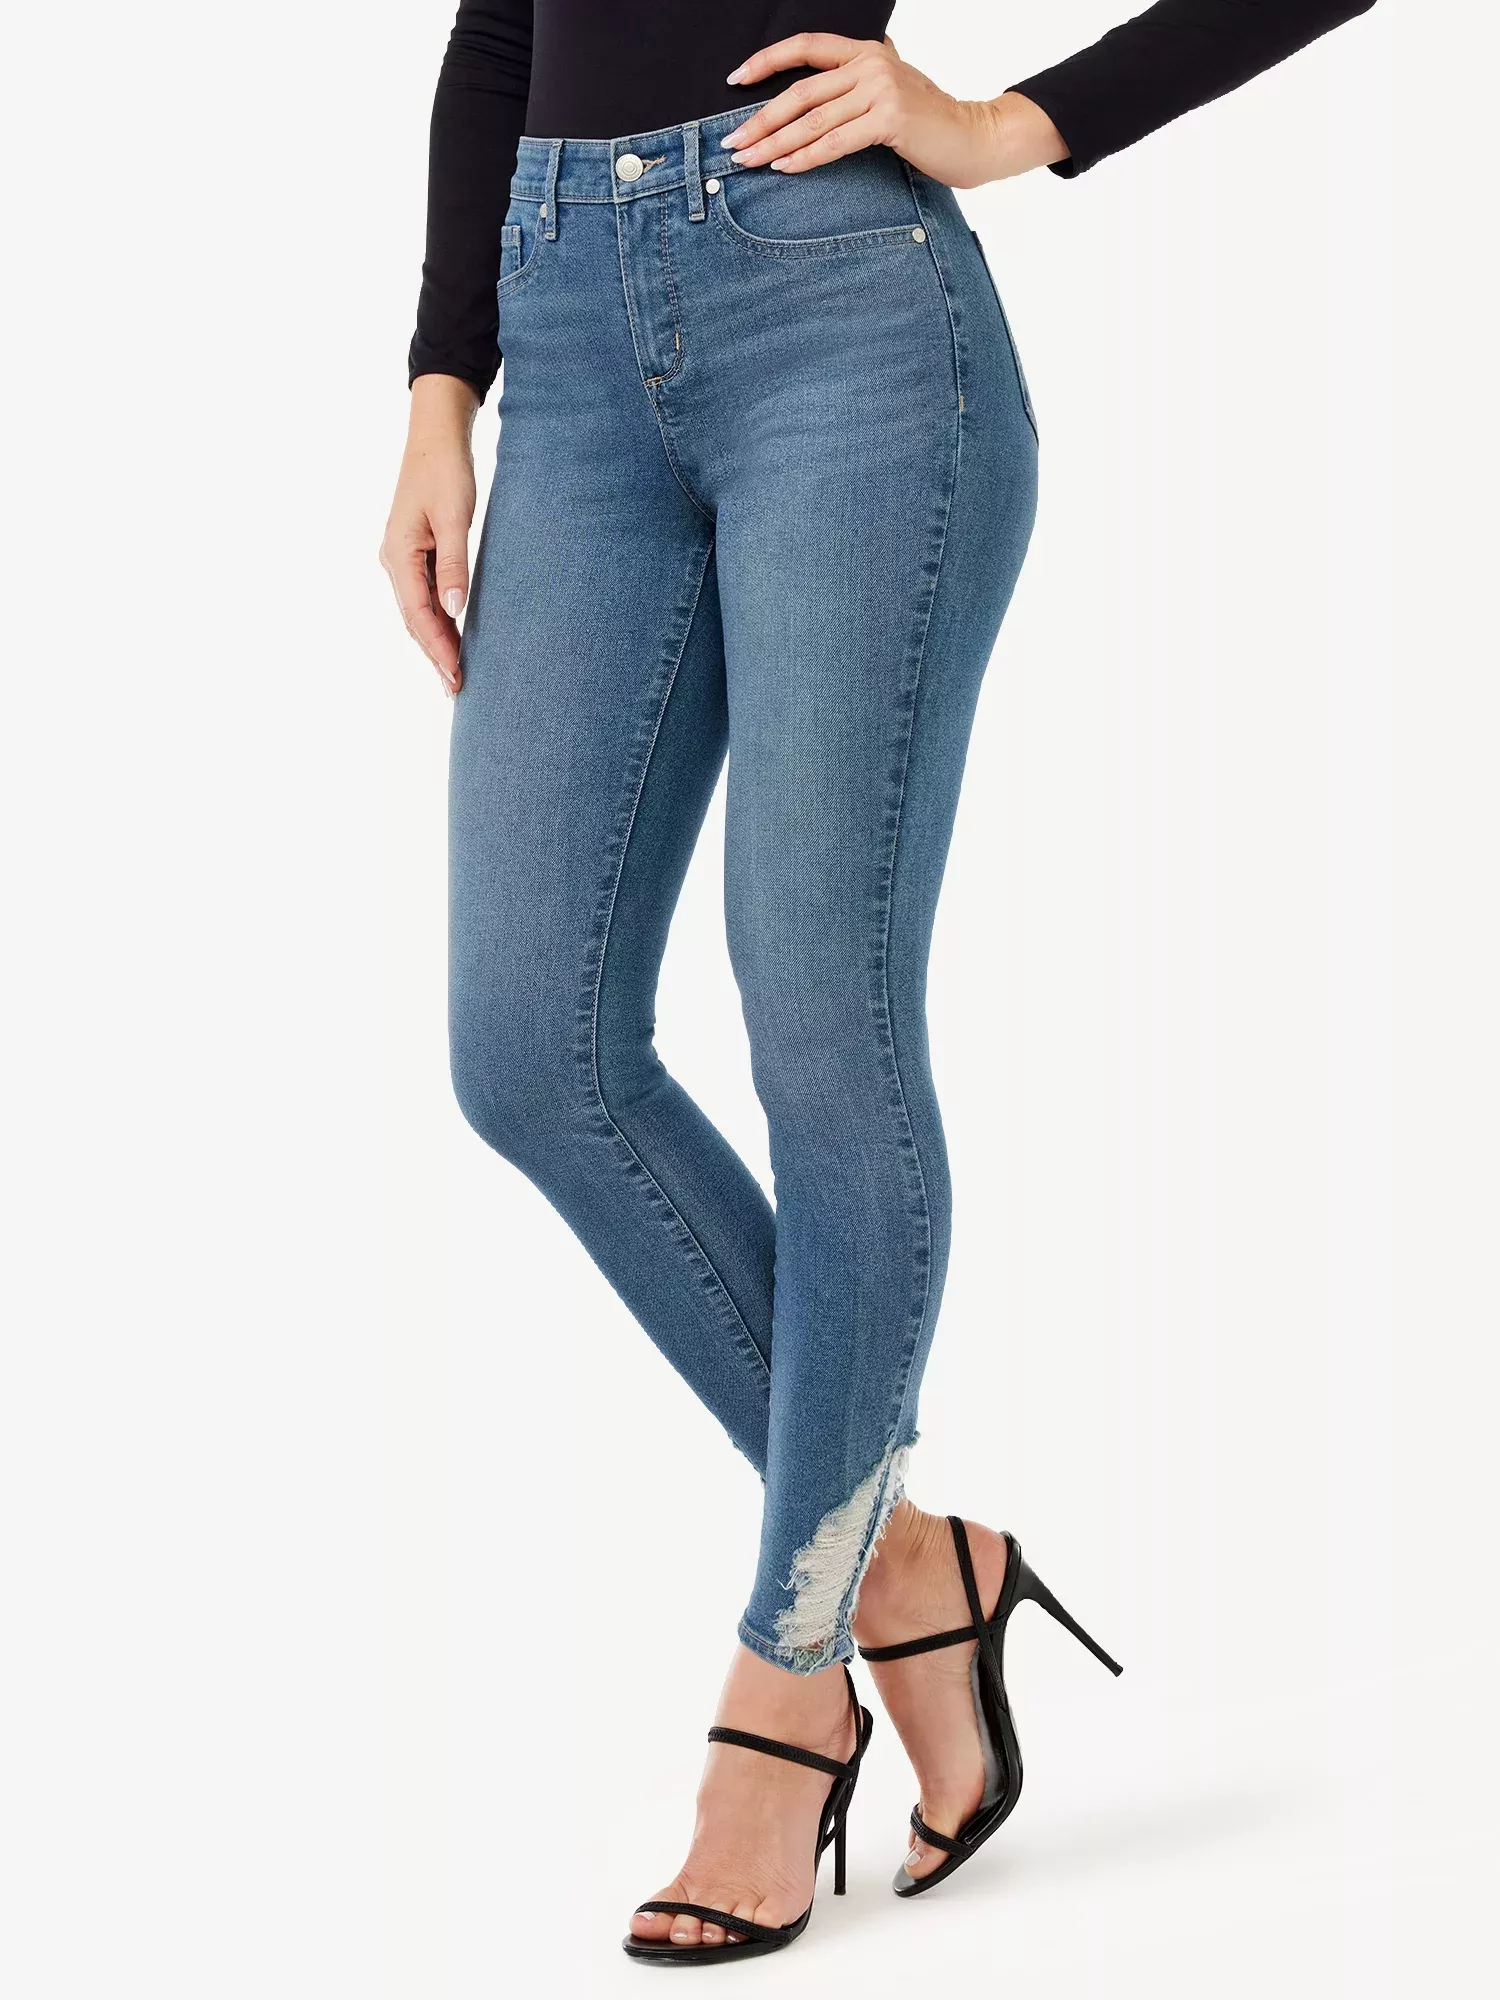 Sofia Jeans by Sofia Vergara Women's Scoop Neck Long Sleeve Bodysuit